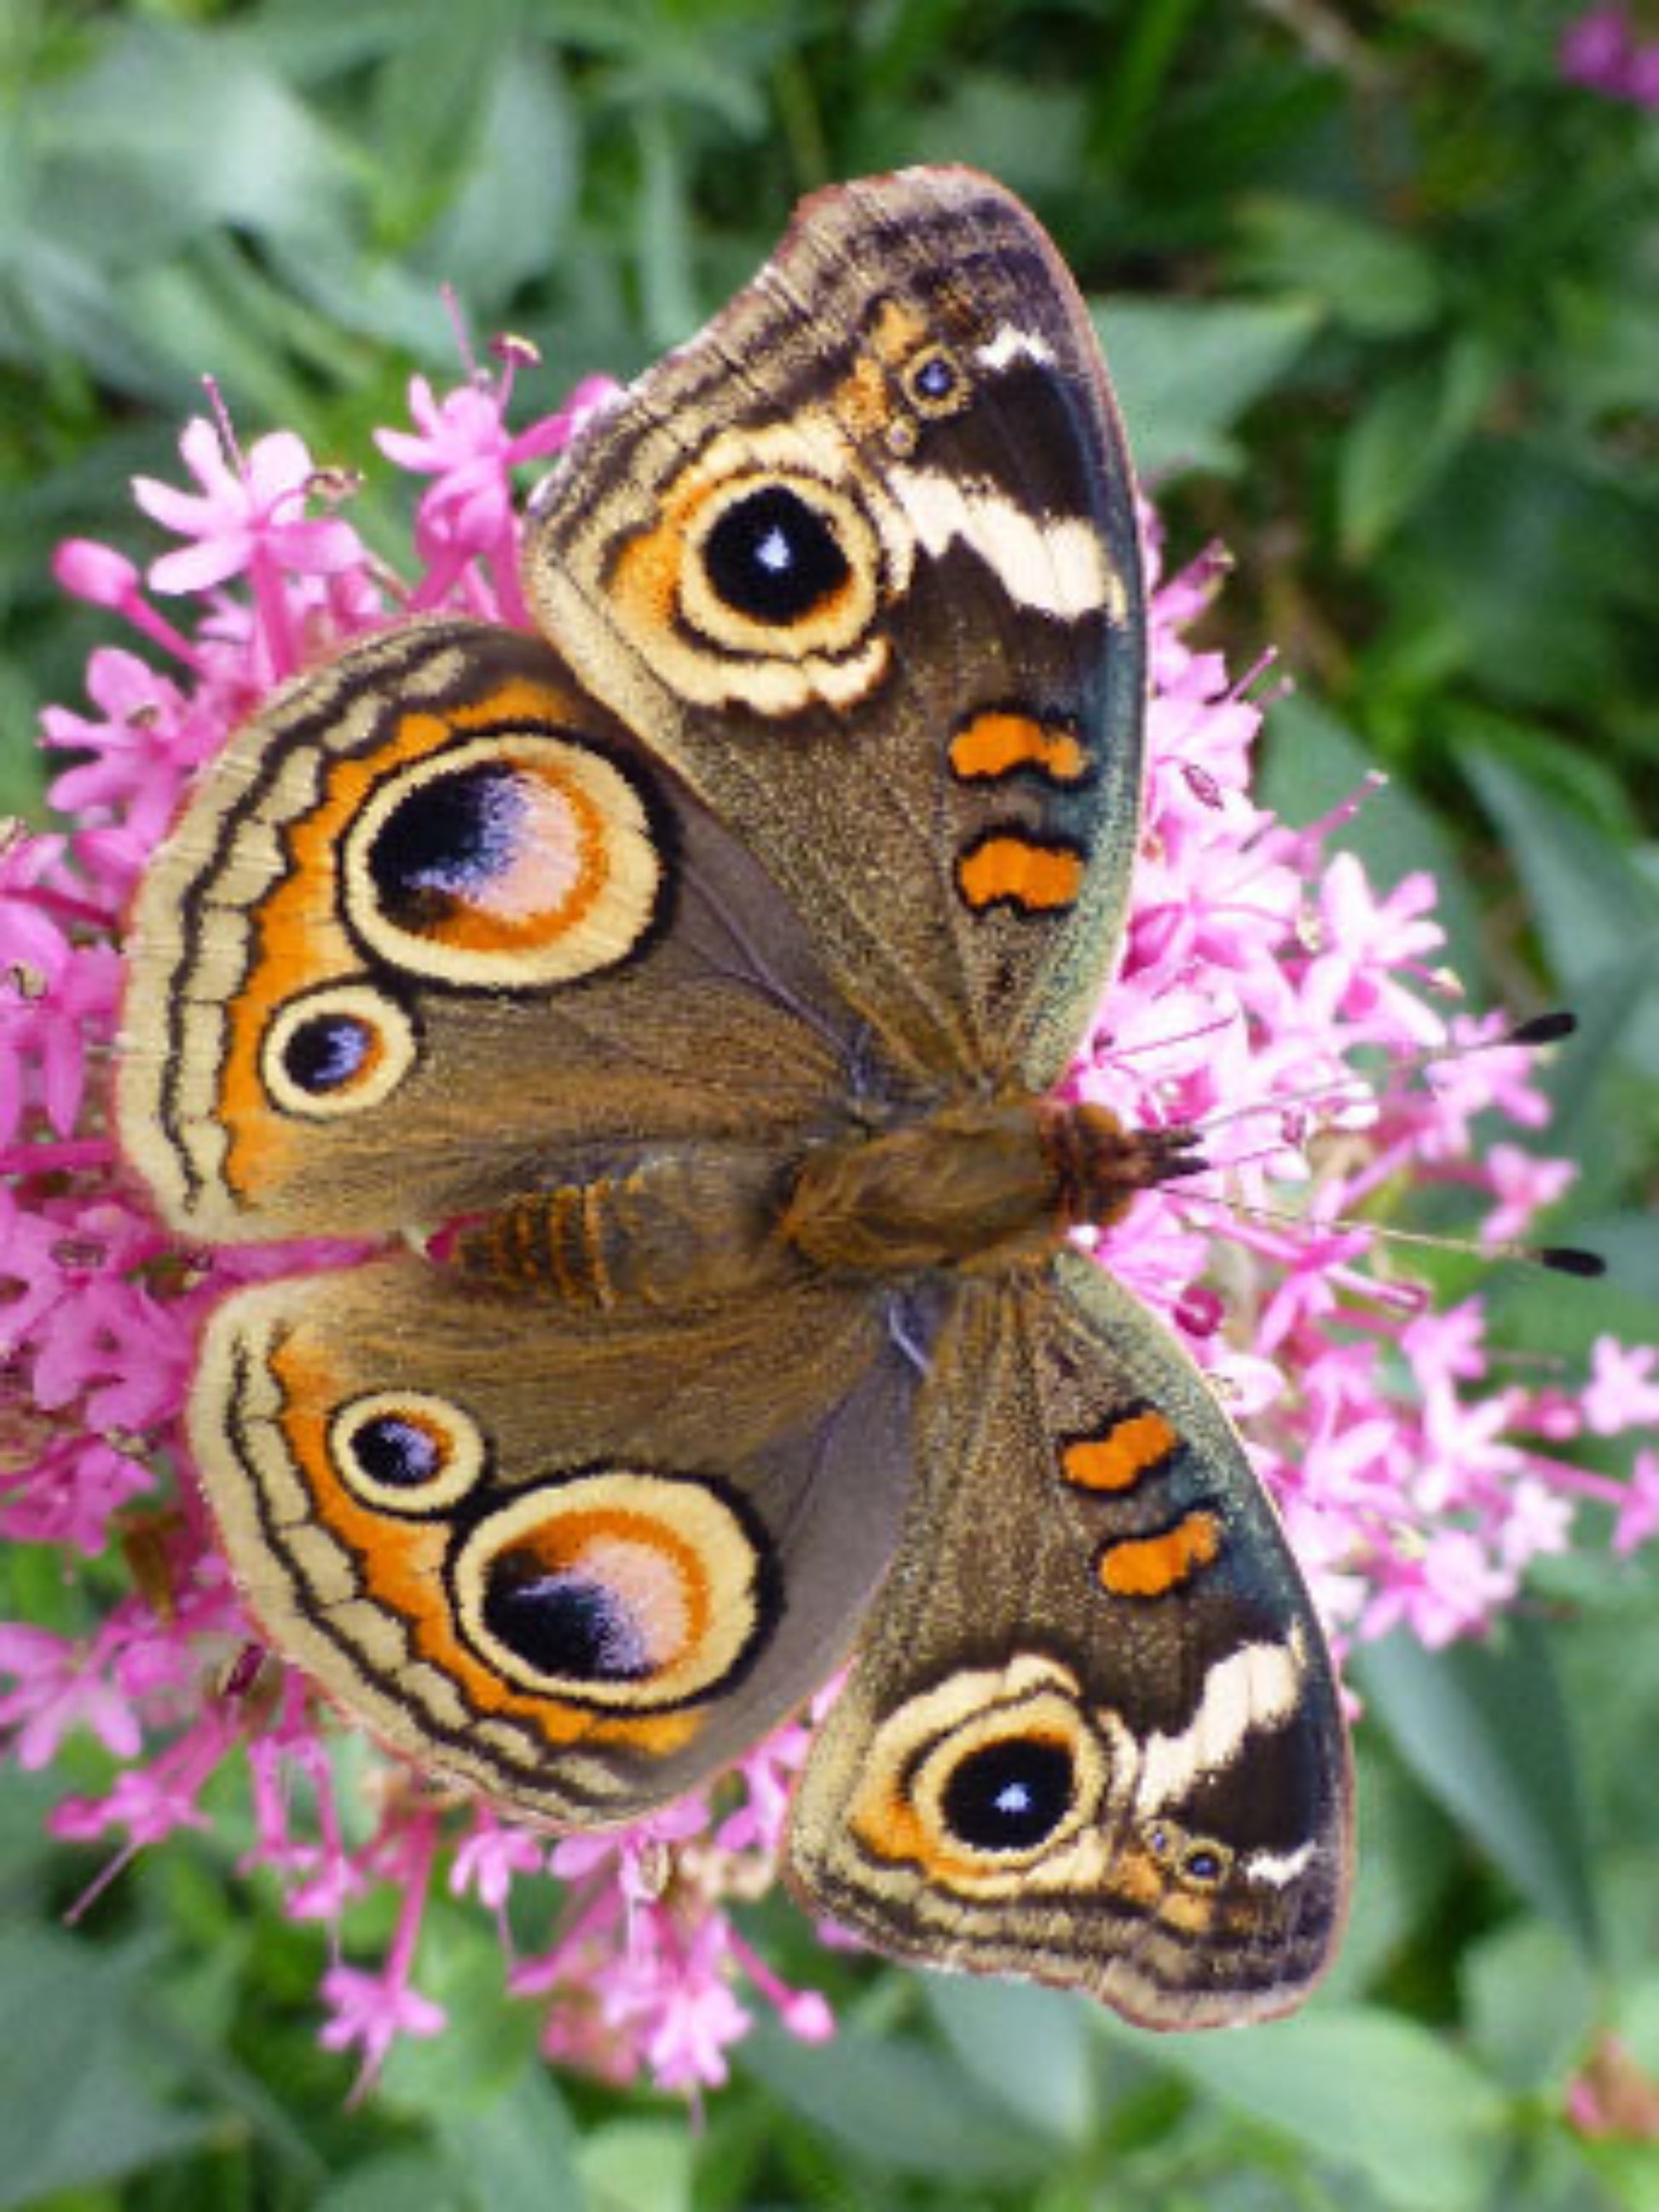 Buckeye butterfly on his host plant dyschoriste humistrata " swamp twinflower"